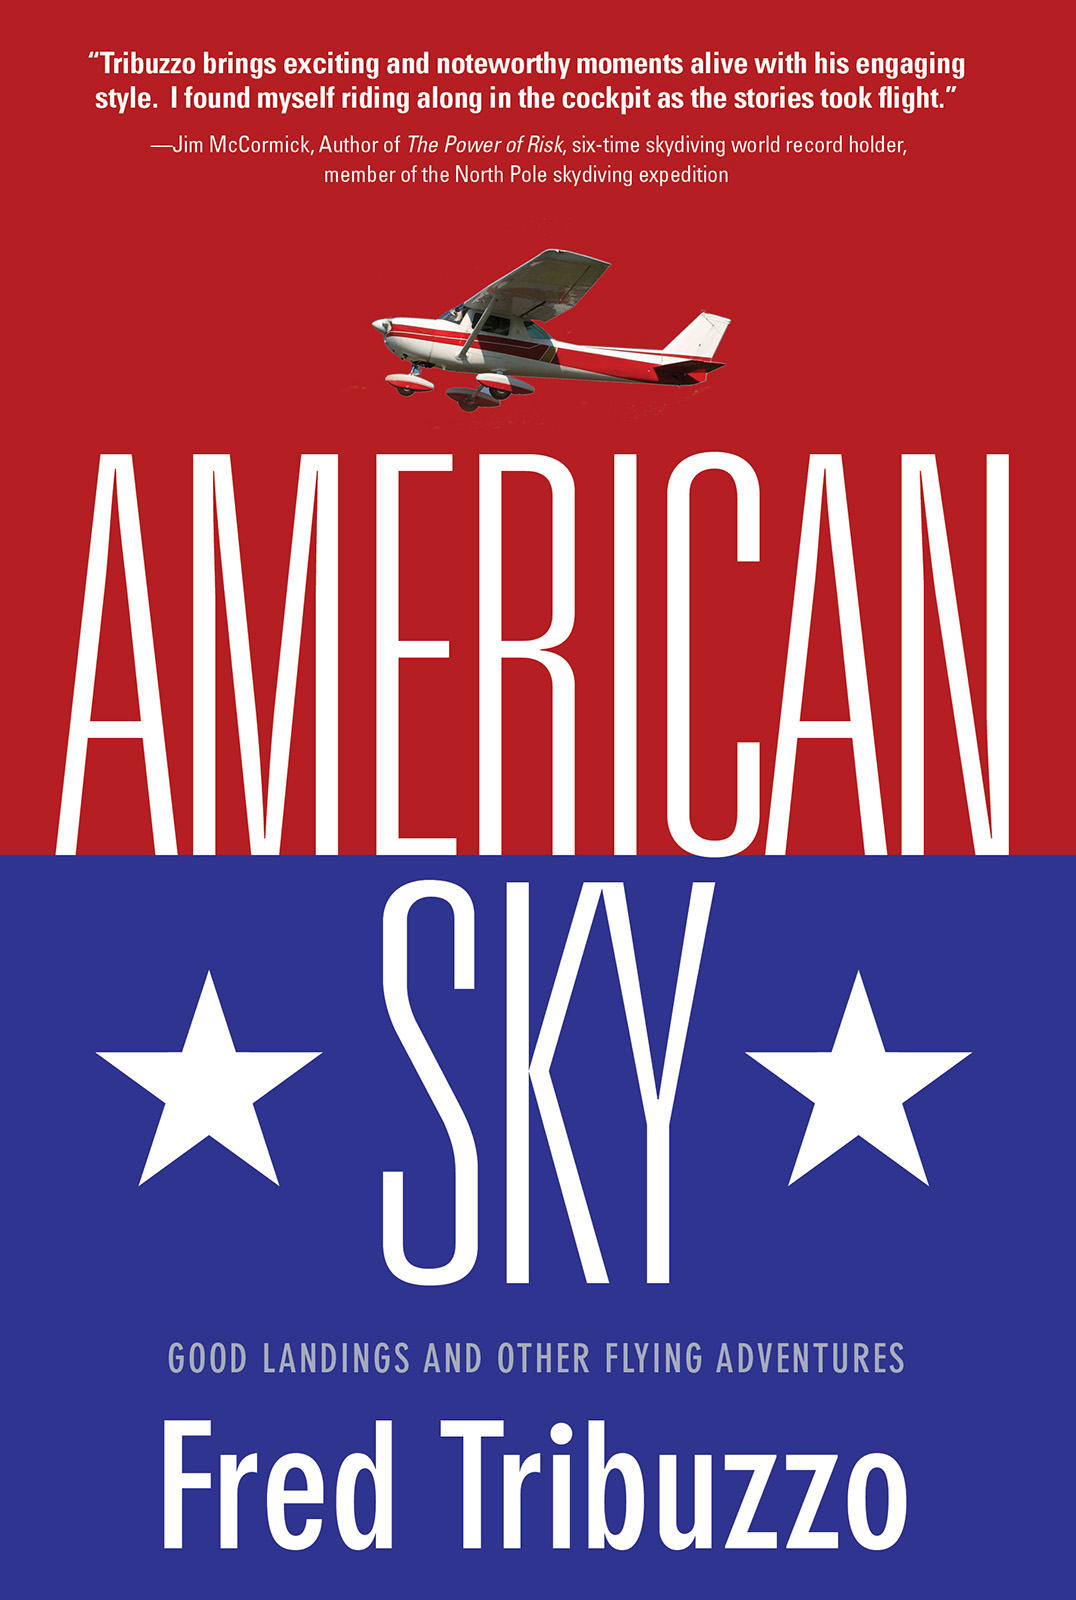 American Sky